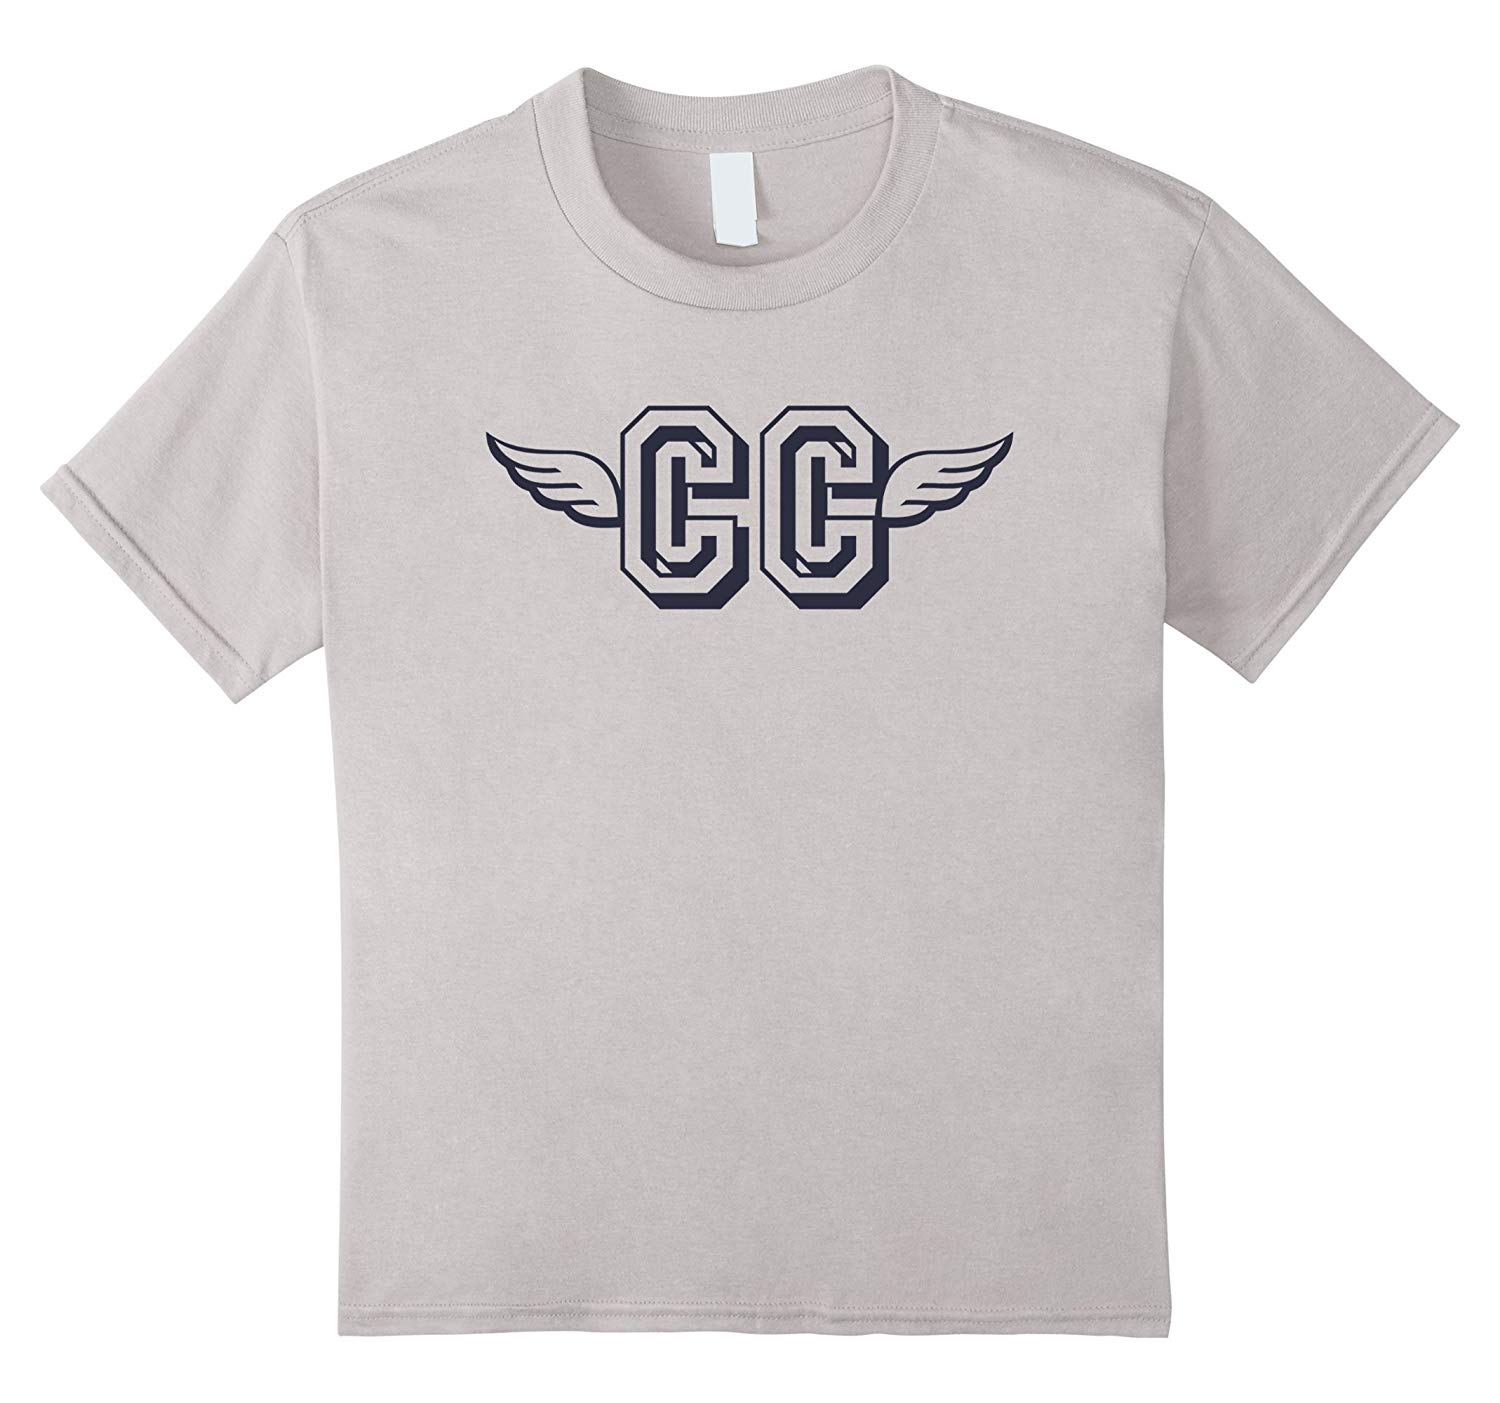 Cross Country CC Logo - Amazon.com: Retro CC Cross Country Running Wings Logo T-Shirt: Clothing